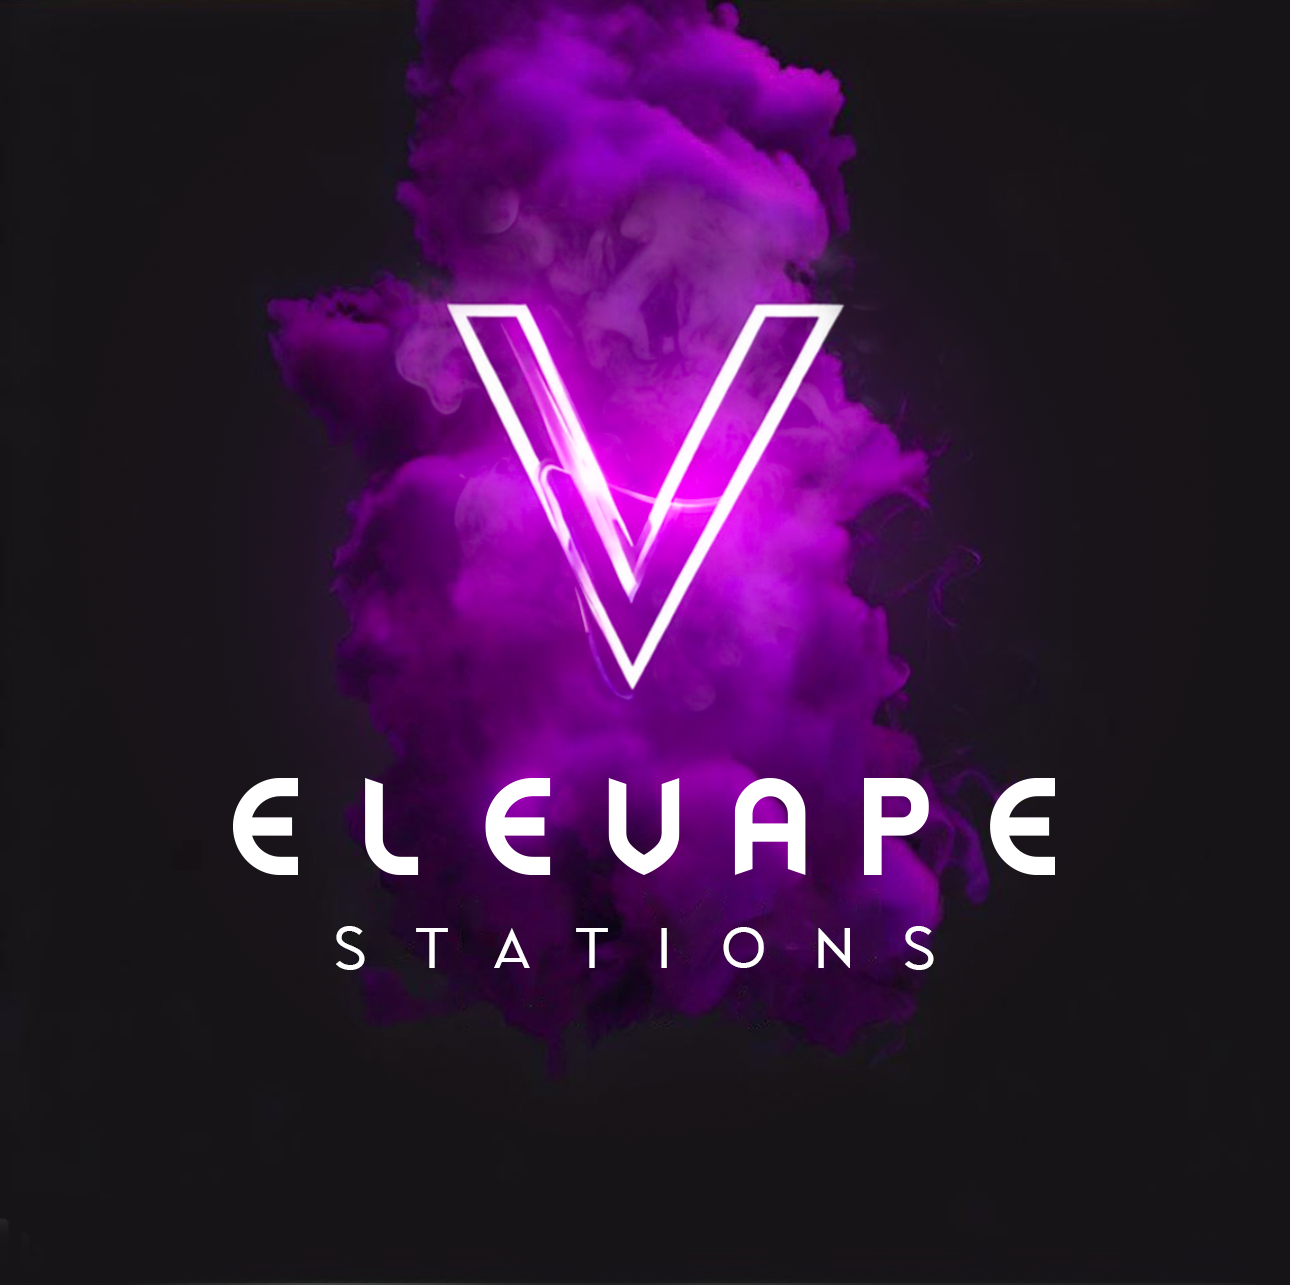 Elevape Stations